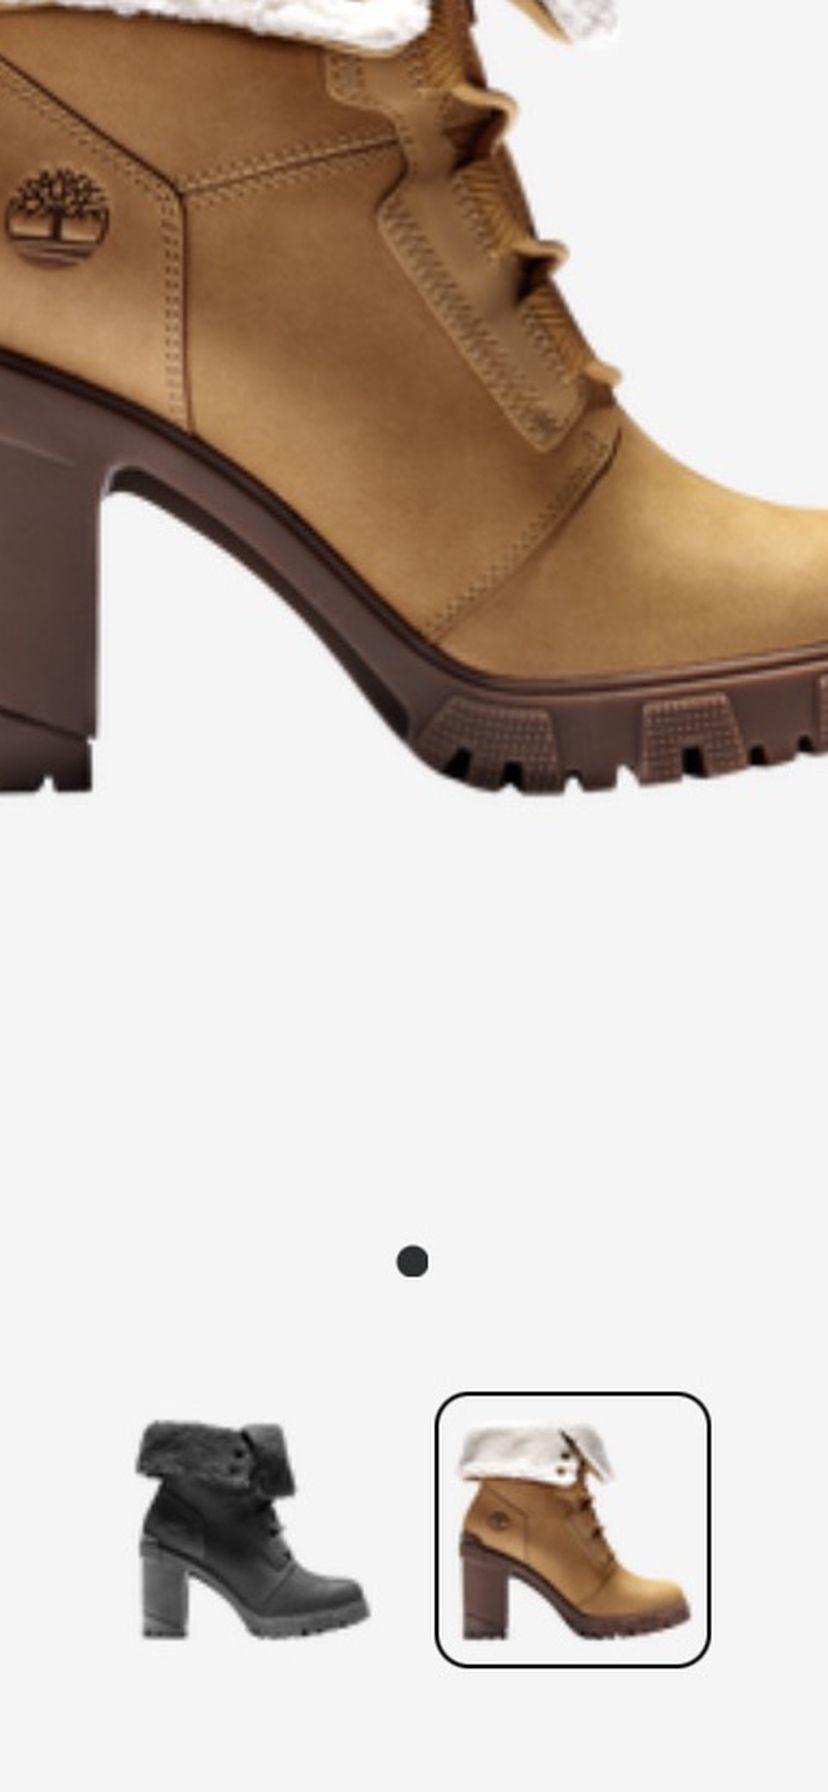 Timberland Woman’s Heel Boots